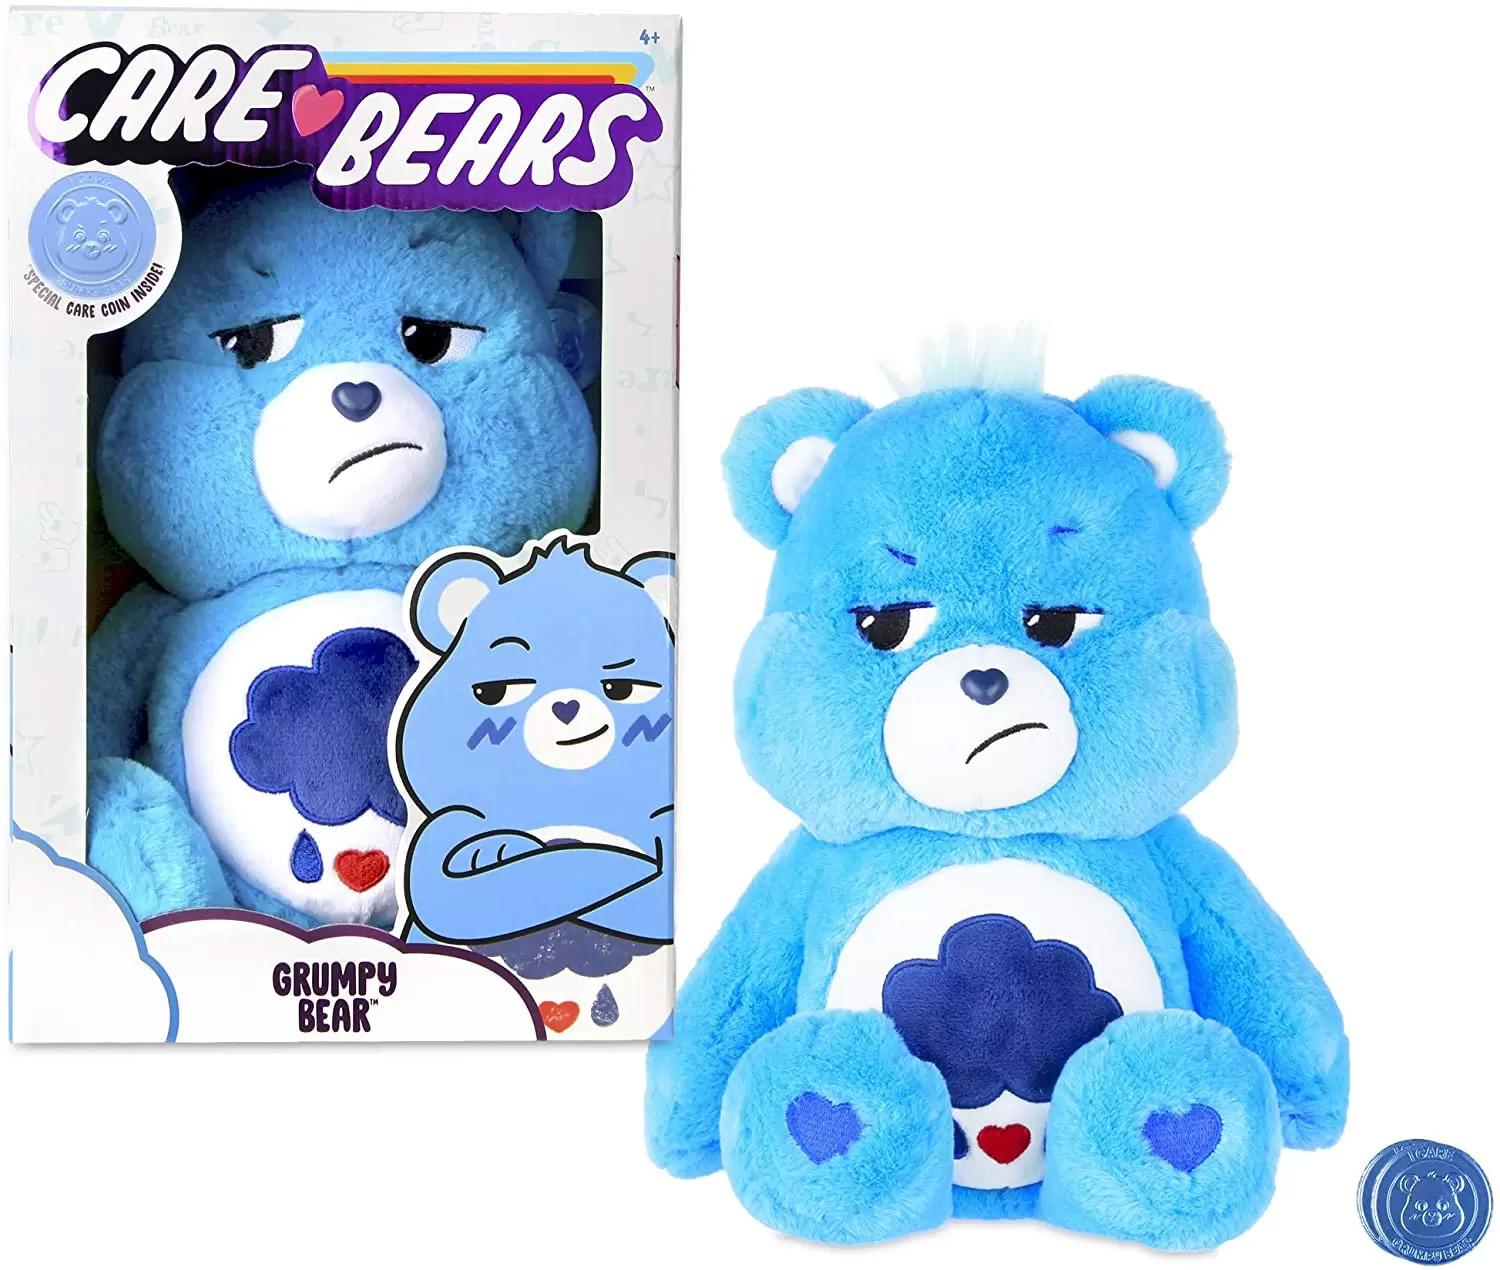 Care Bears 14in Grumpy Bear Stuffed Animal for $6.88